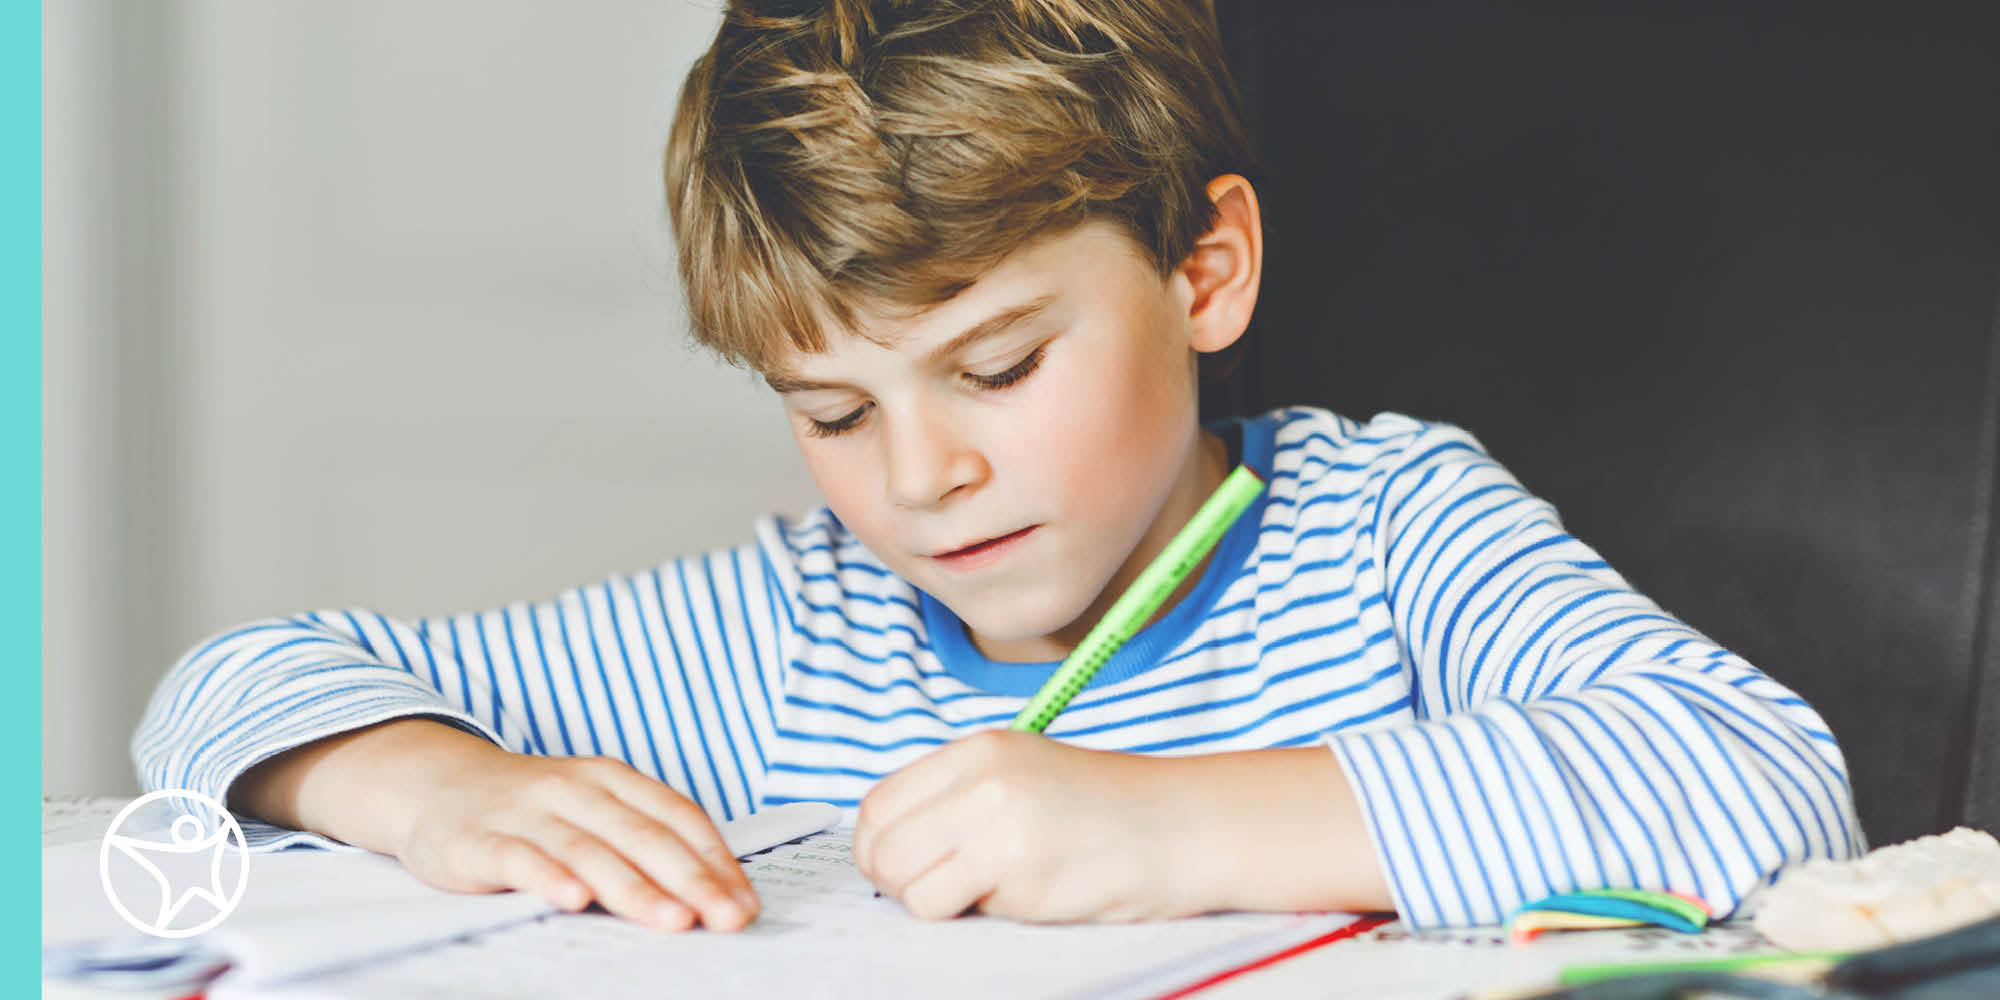 A young boy is doing his online school classwork